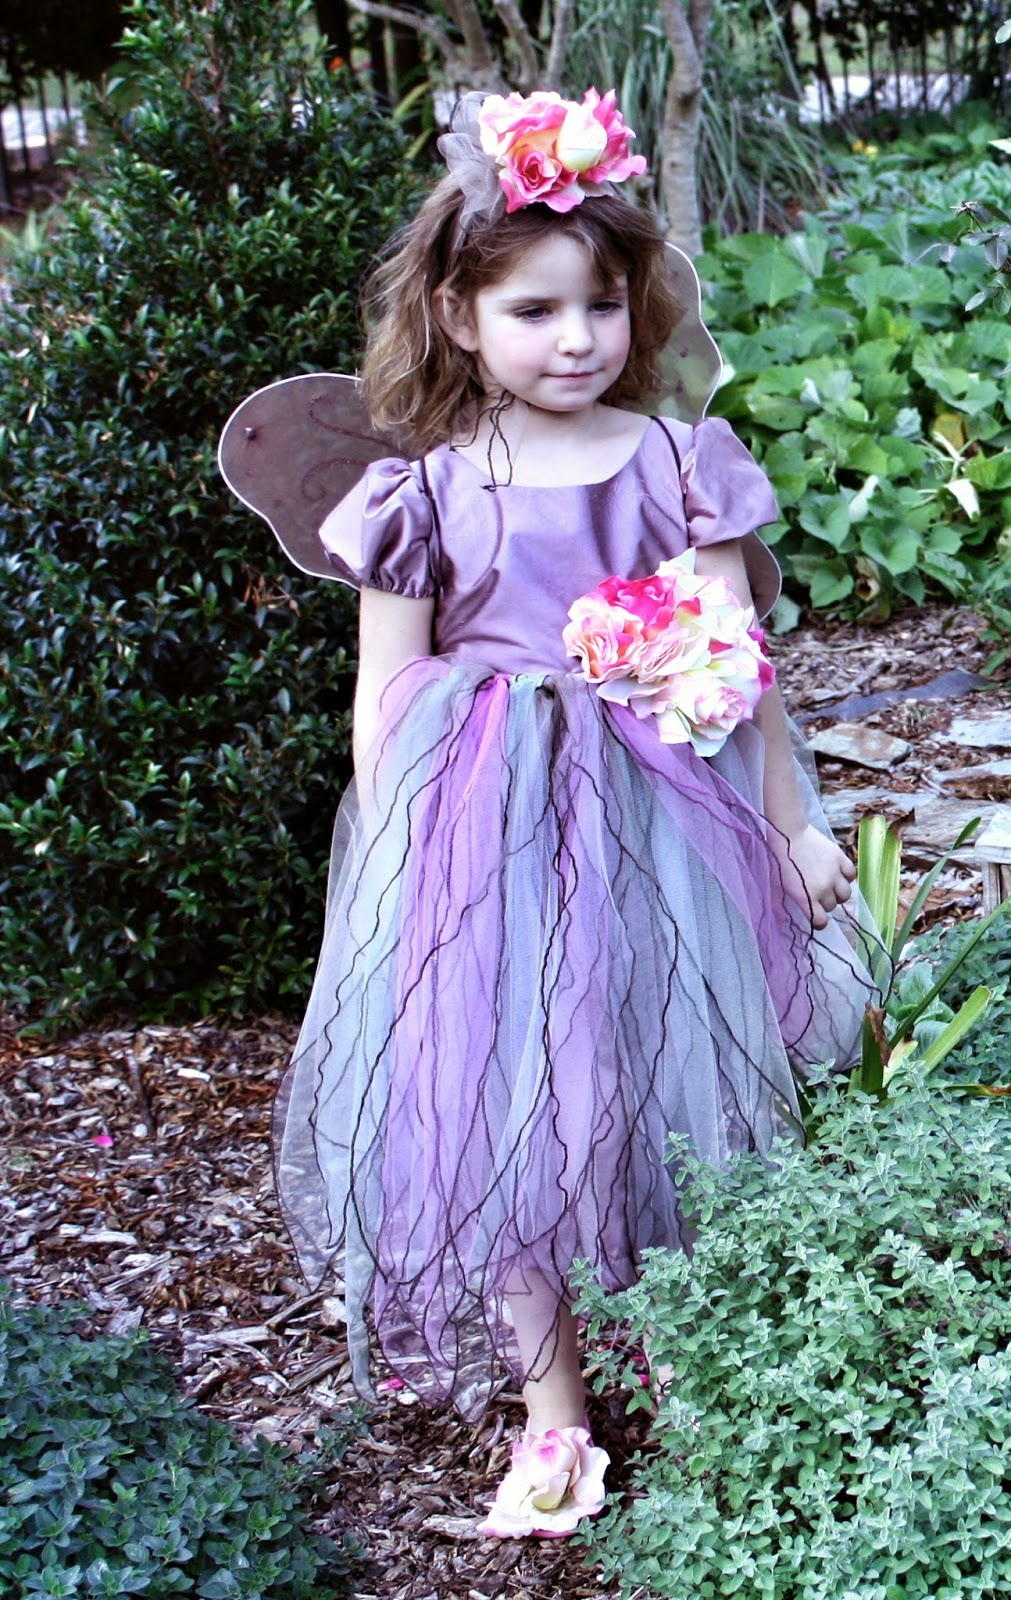 sew grown: Garden Fairy Costume